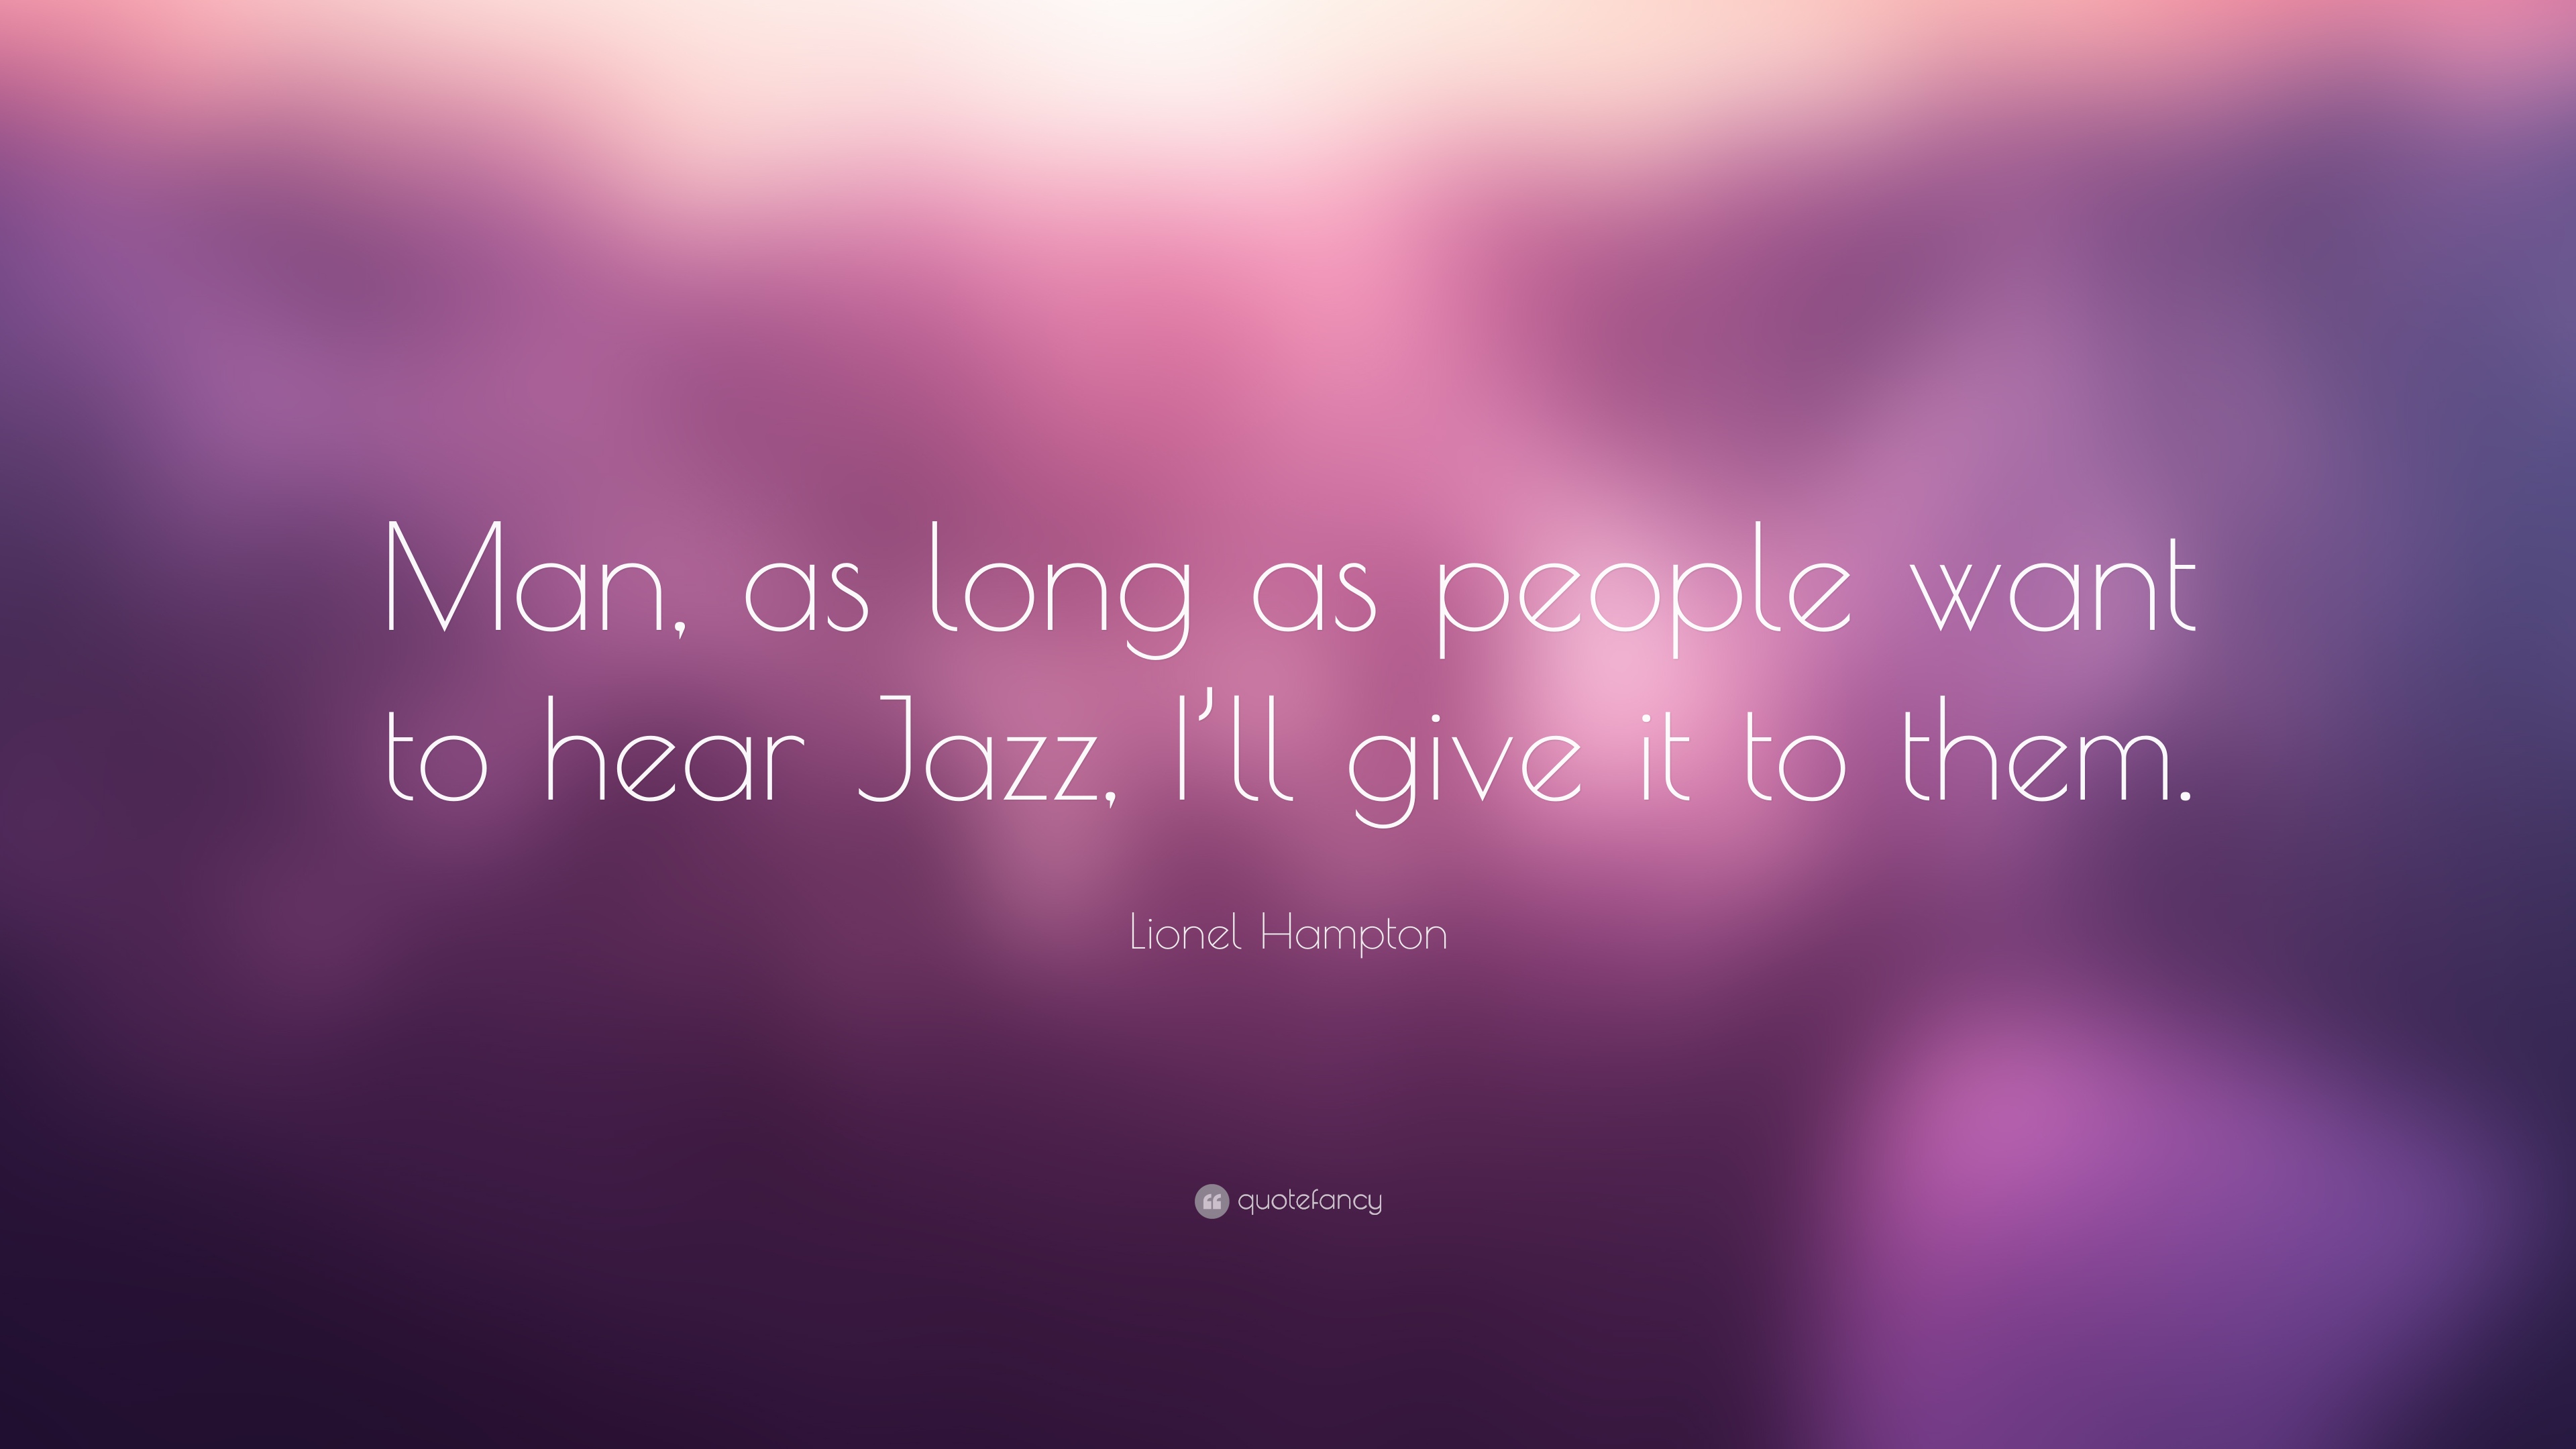 6 Quotes About Lionel Hampton